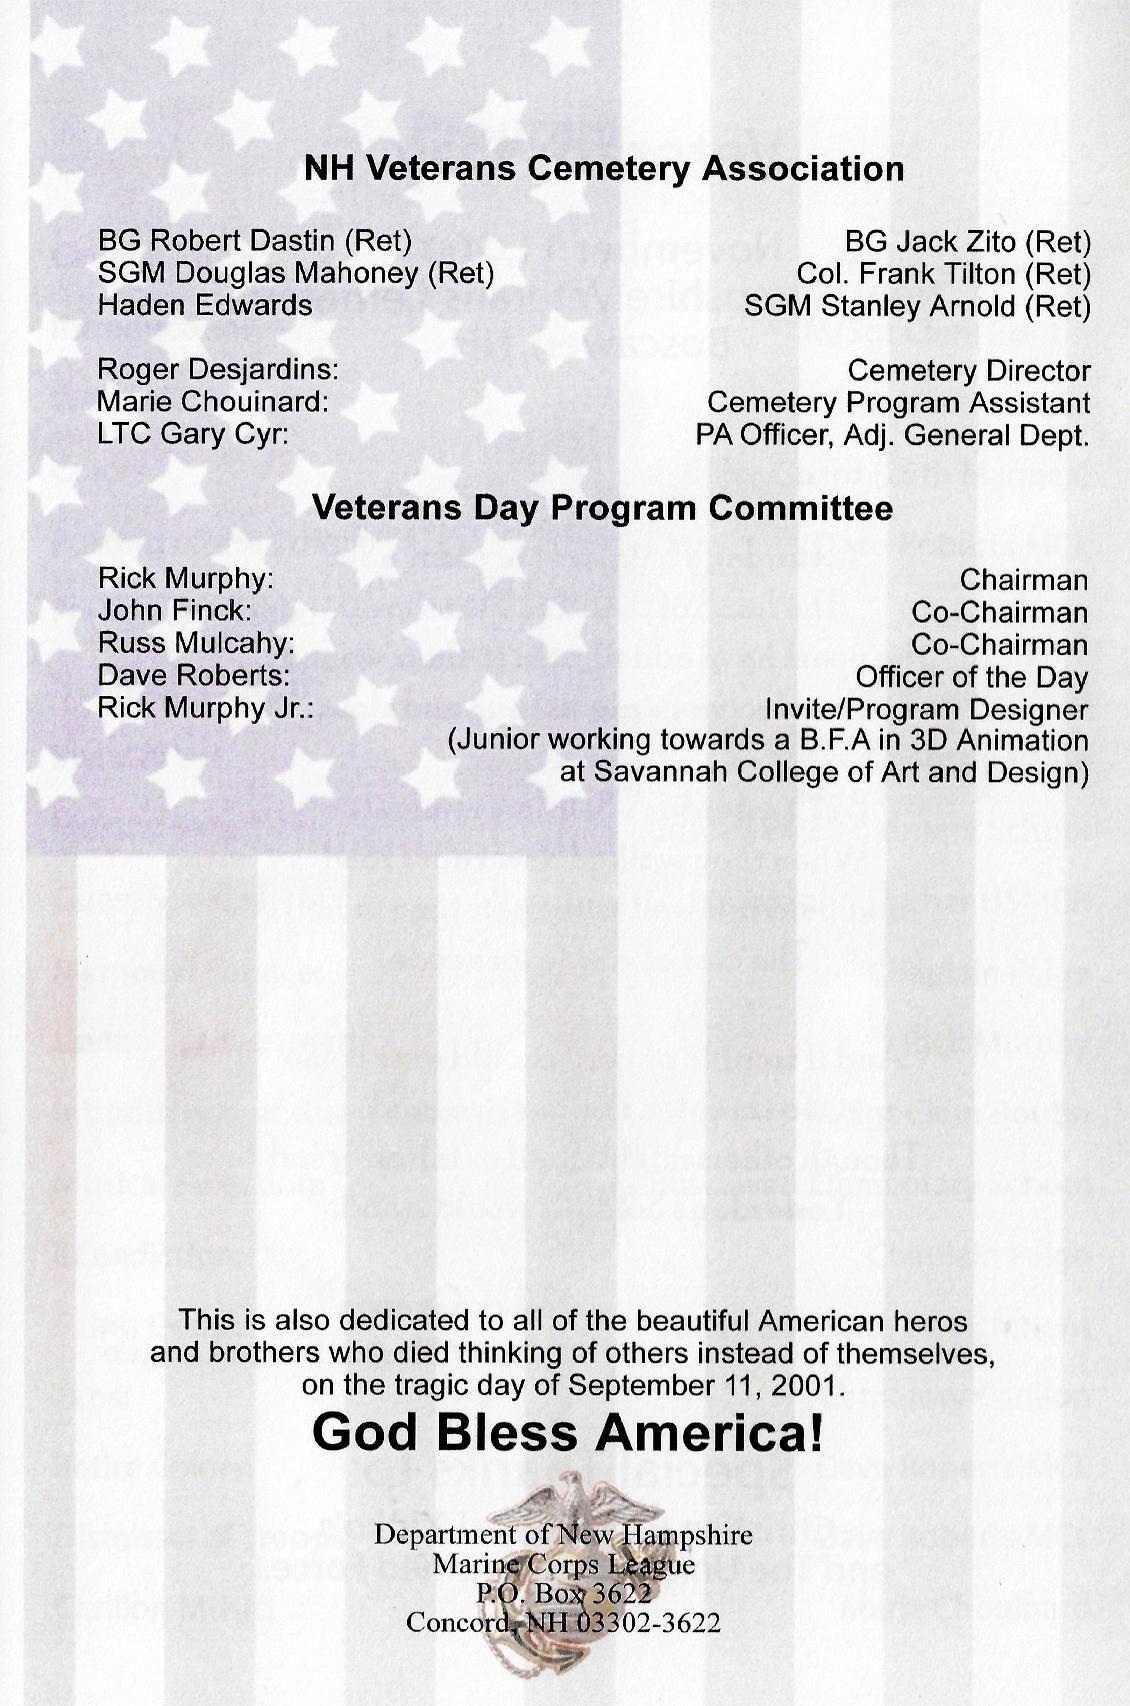 Veterans Day Program at the NH State Veterans Cemetery Nov 11 2001